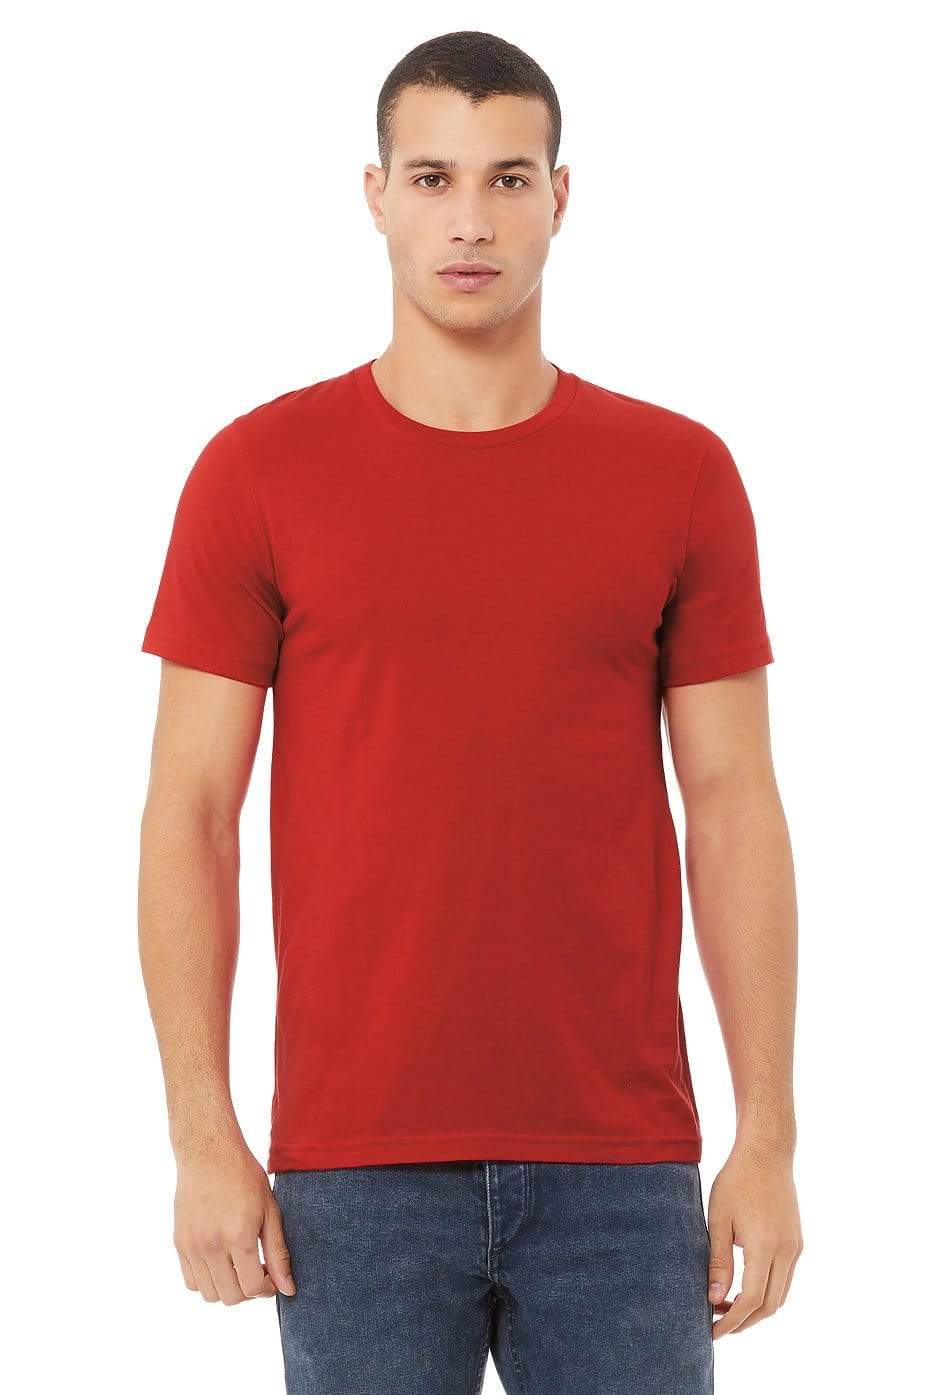 Grooveman Music T Shirt Small / Red Jersey Short Sleeve Tee